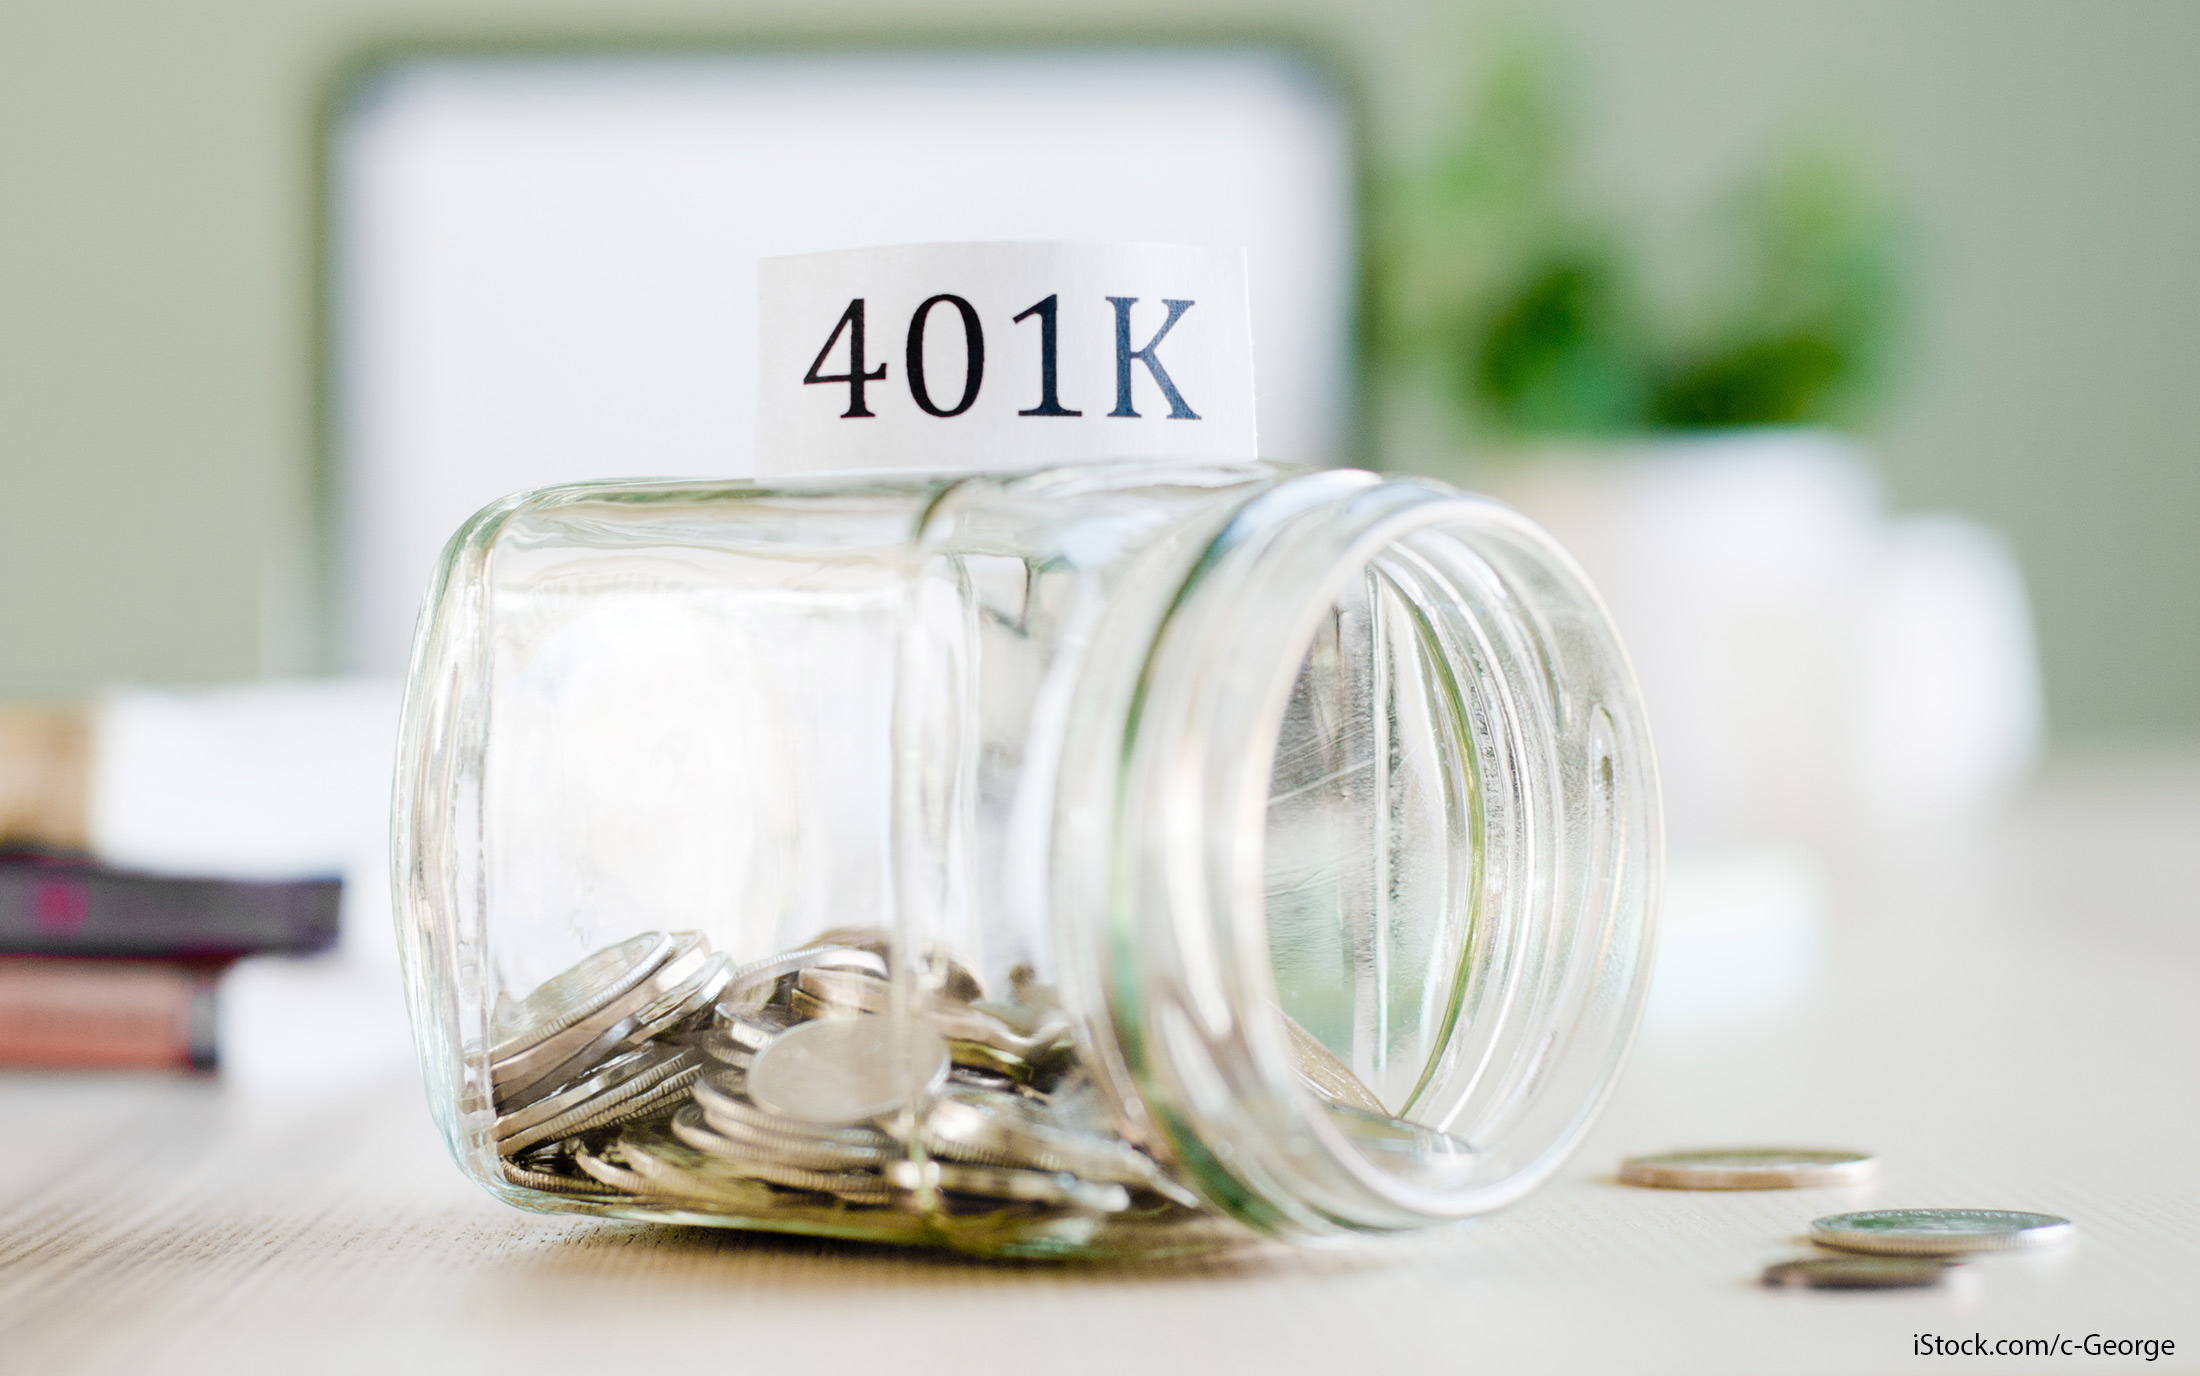 how does 401k make money